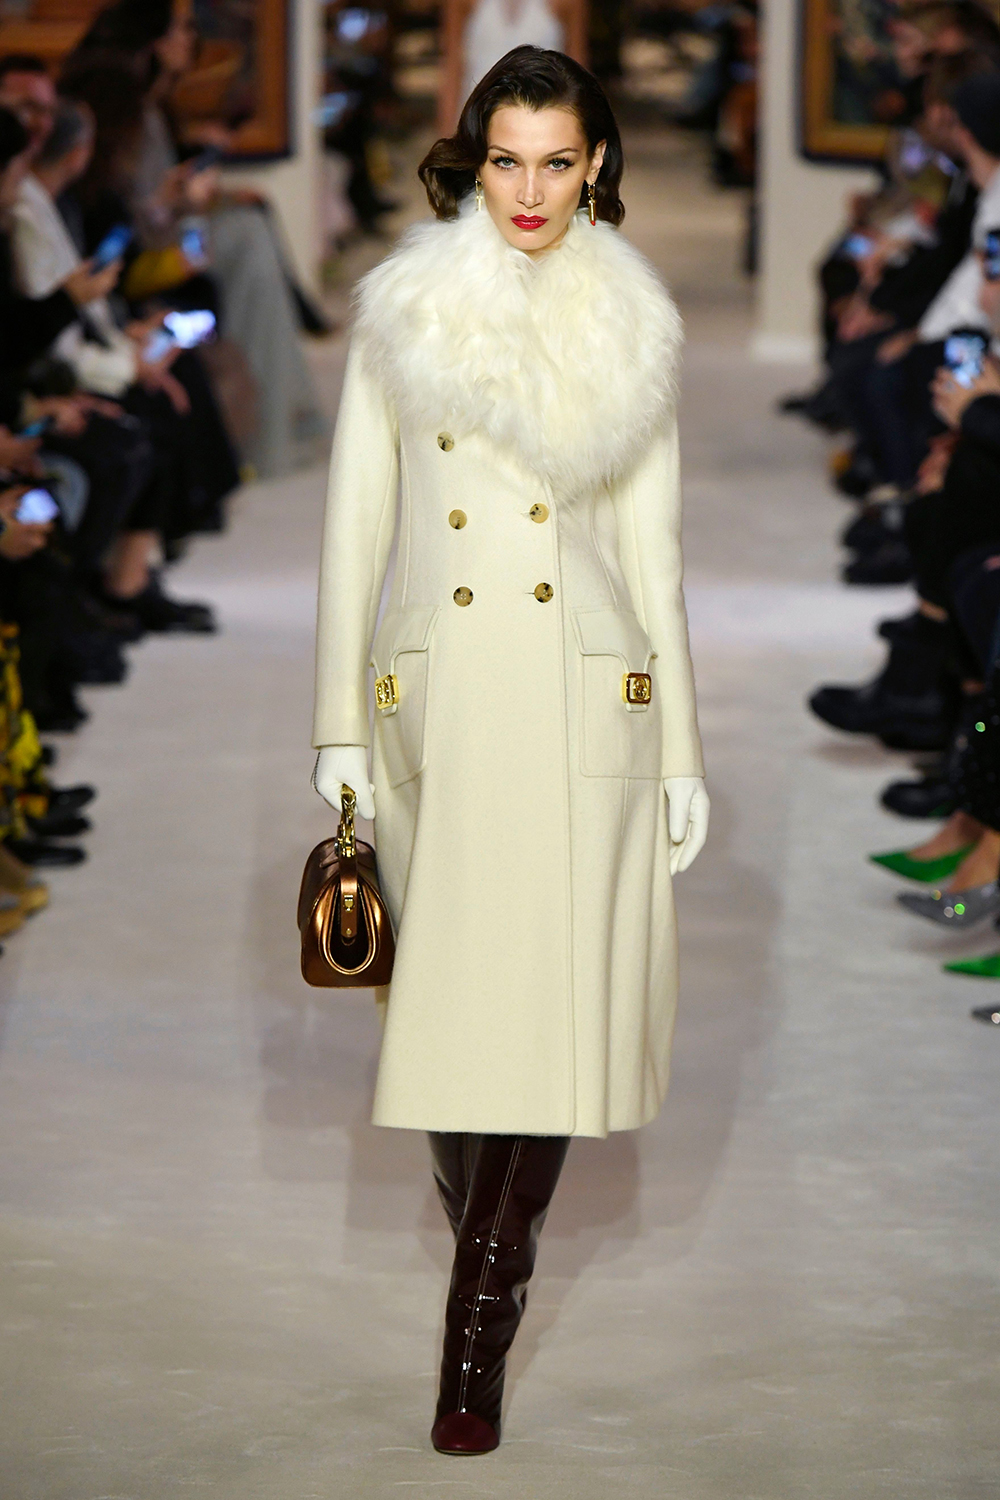 Bella Hadid attends the Louis Vuitton Menswear Fall/Winter 2020